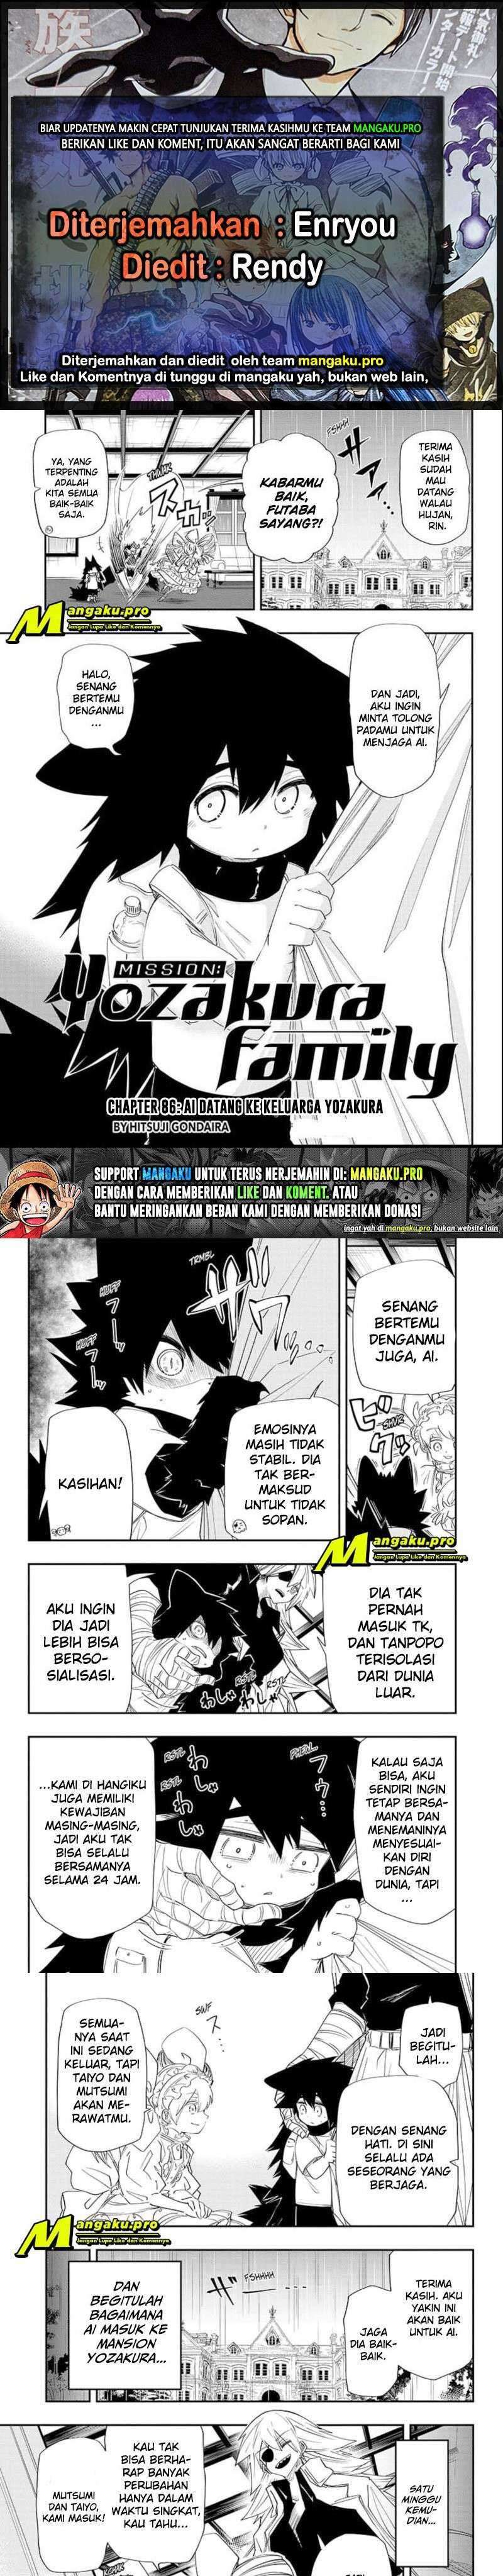 Mission: Yozakura Family: Chapter 86 - Page 1